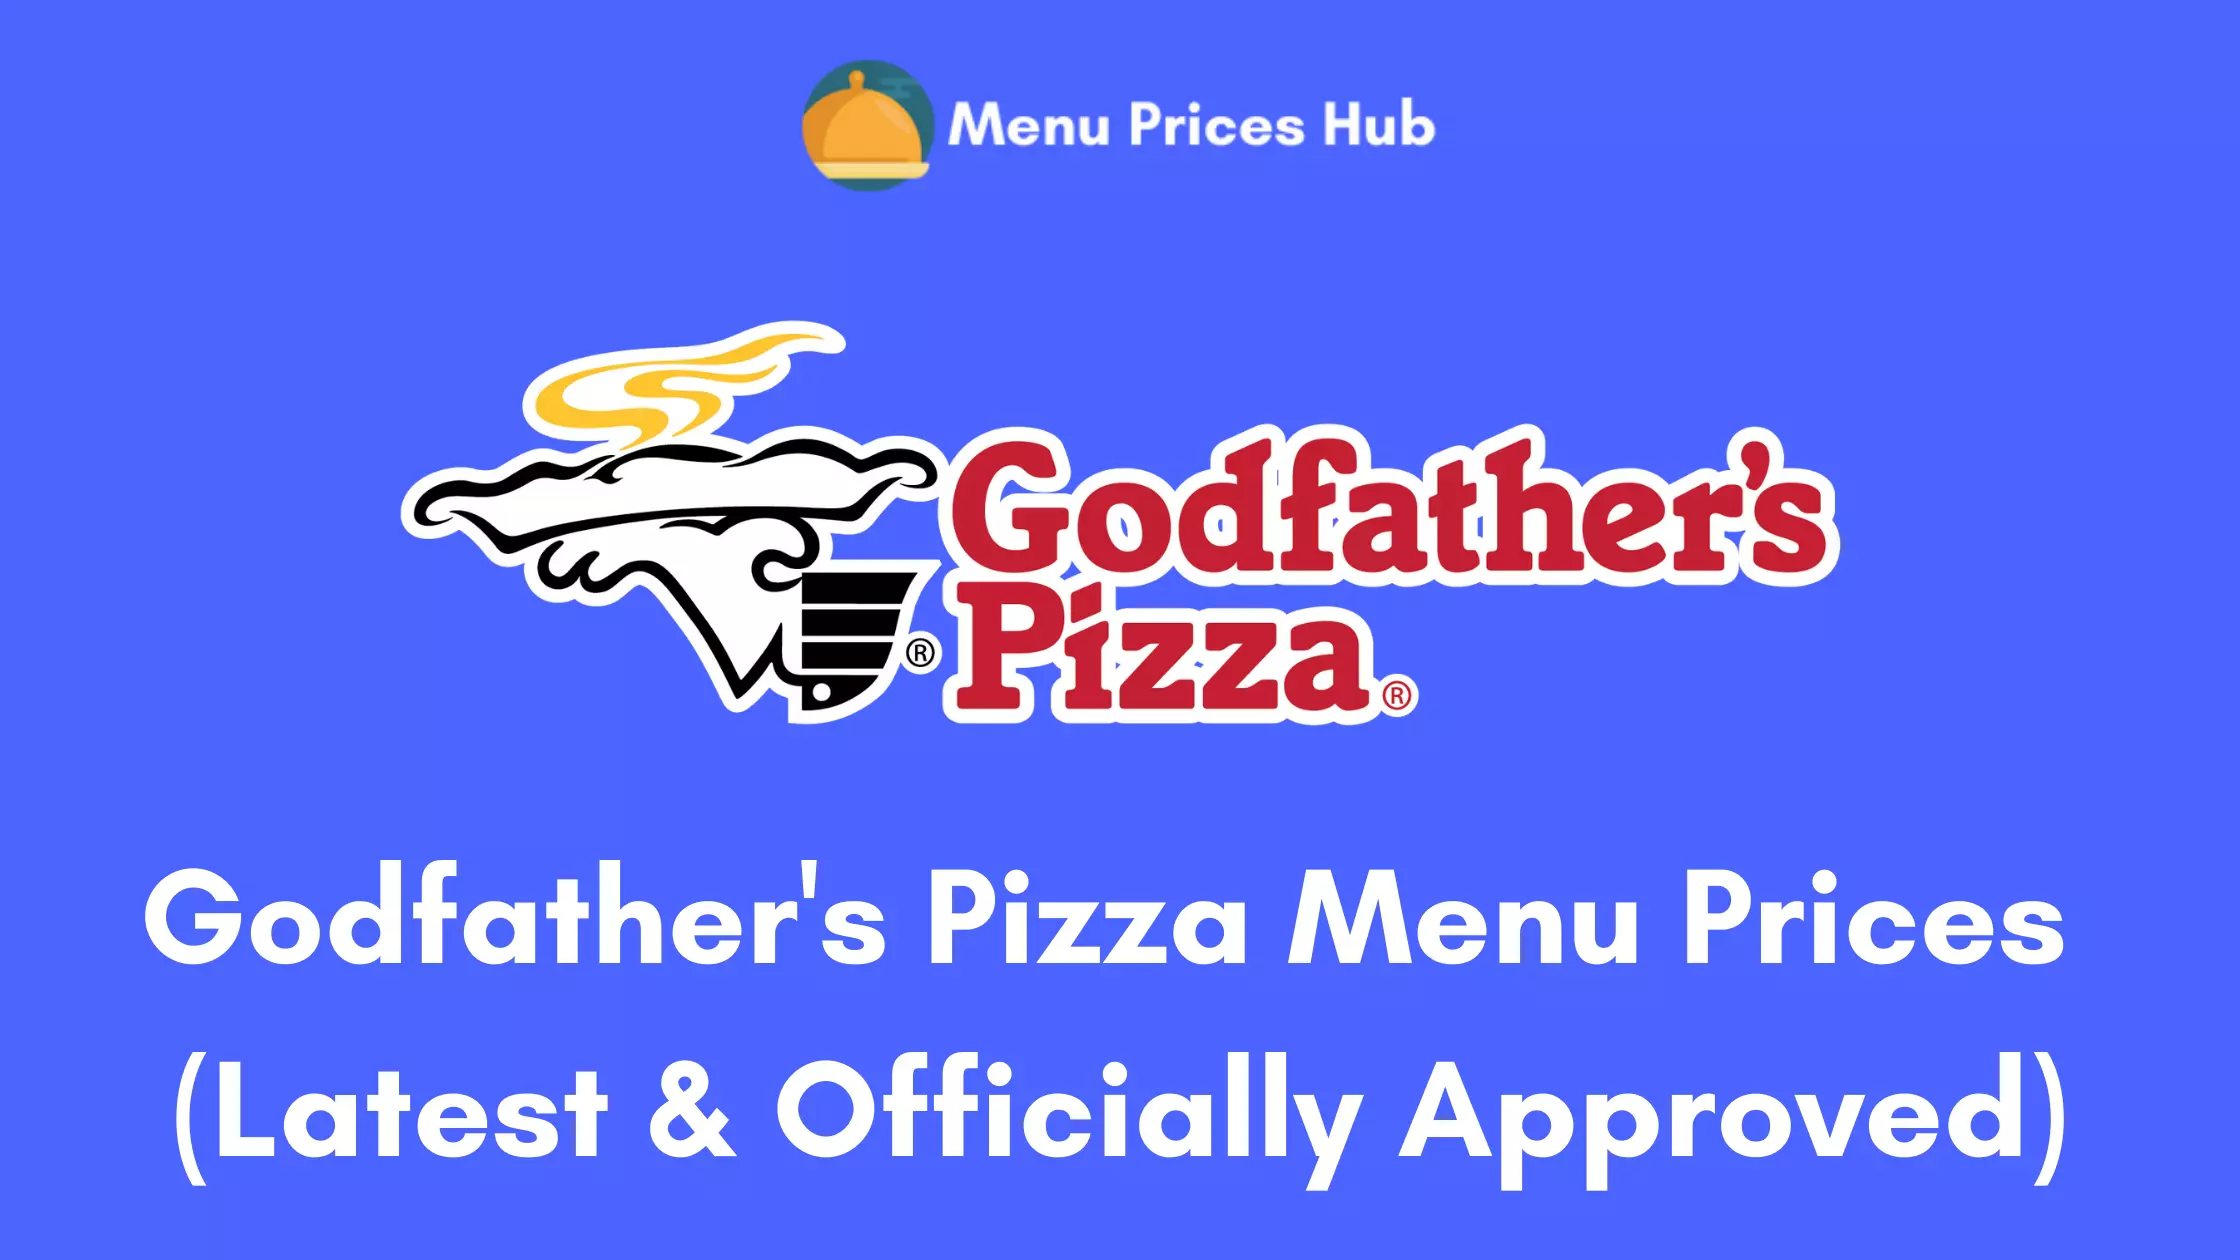 Godfather's Pizza menu prices